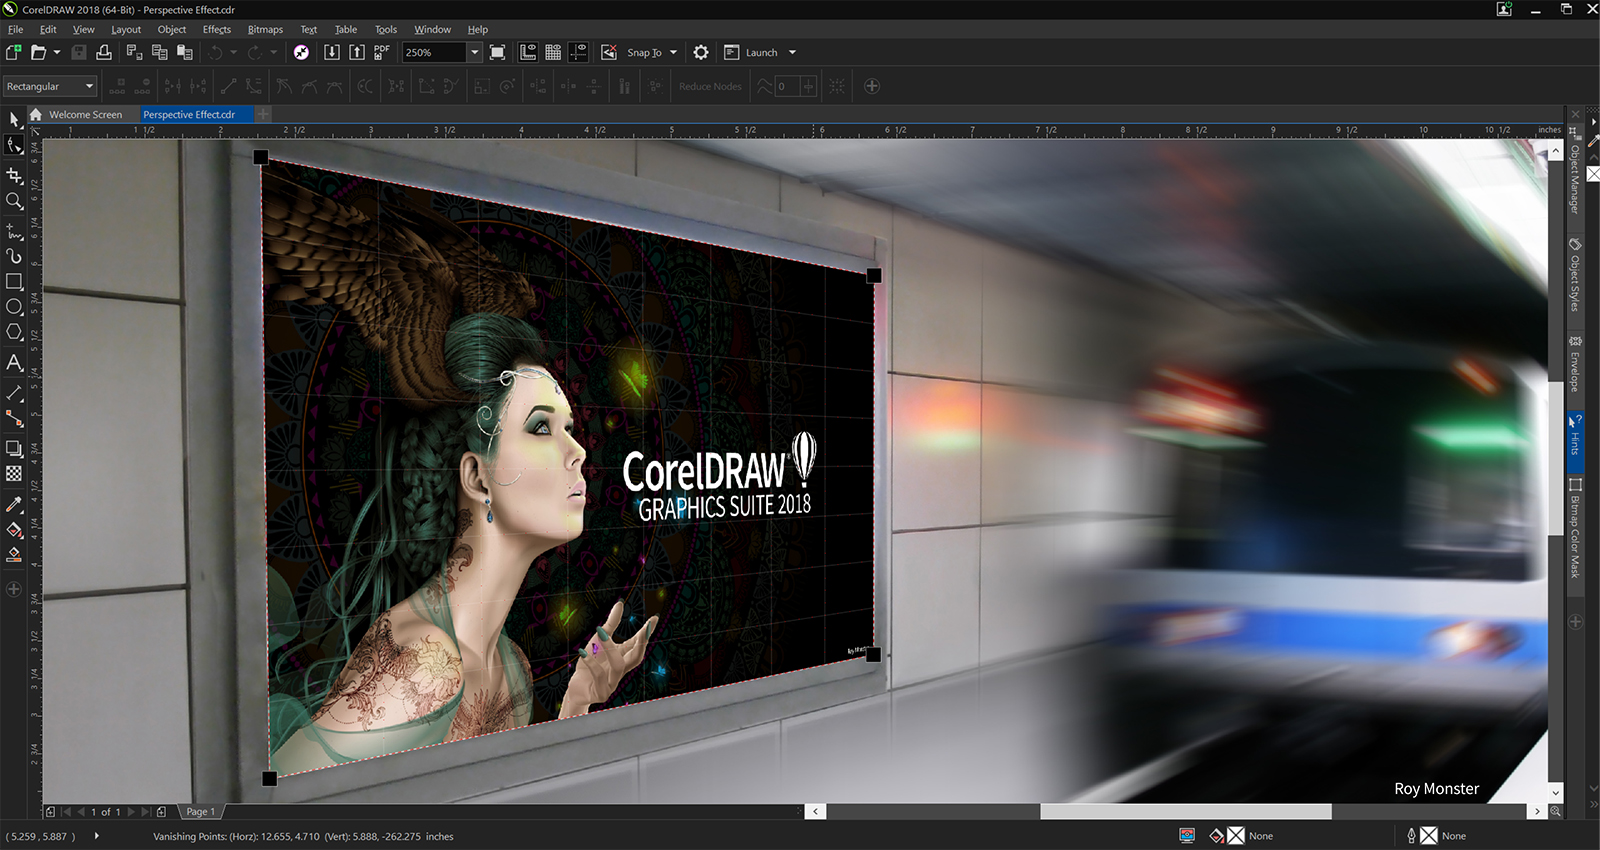 coreldraw graphics suite 2018 launches  perspective effect copy